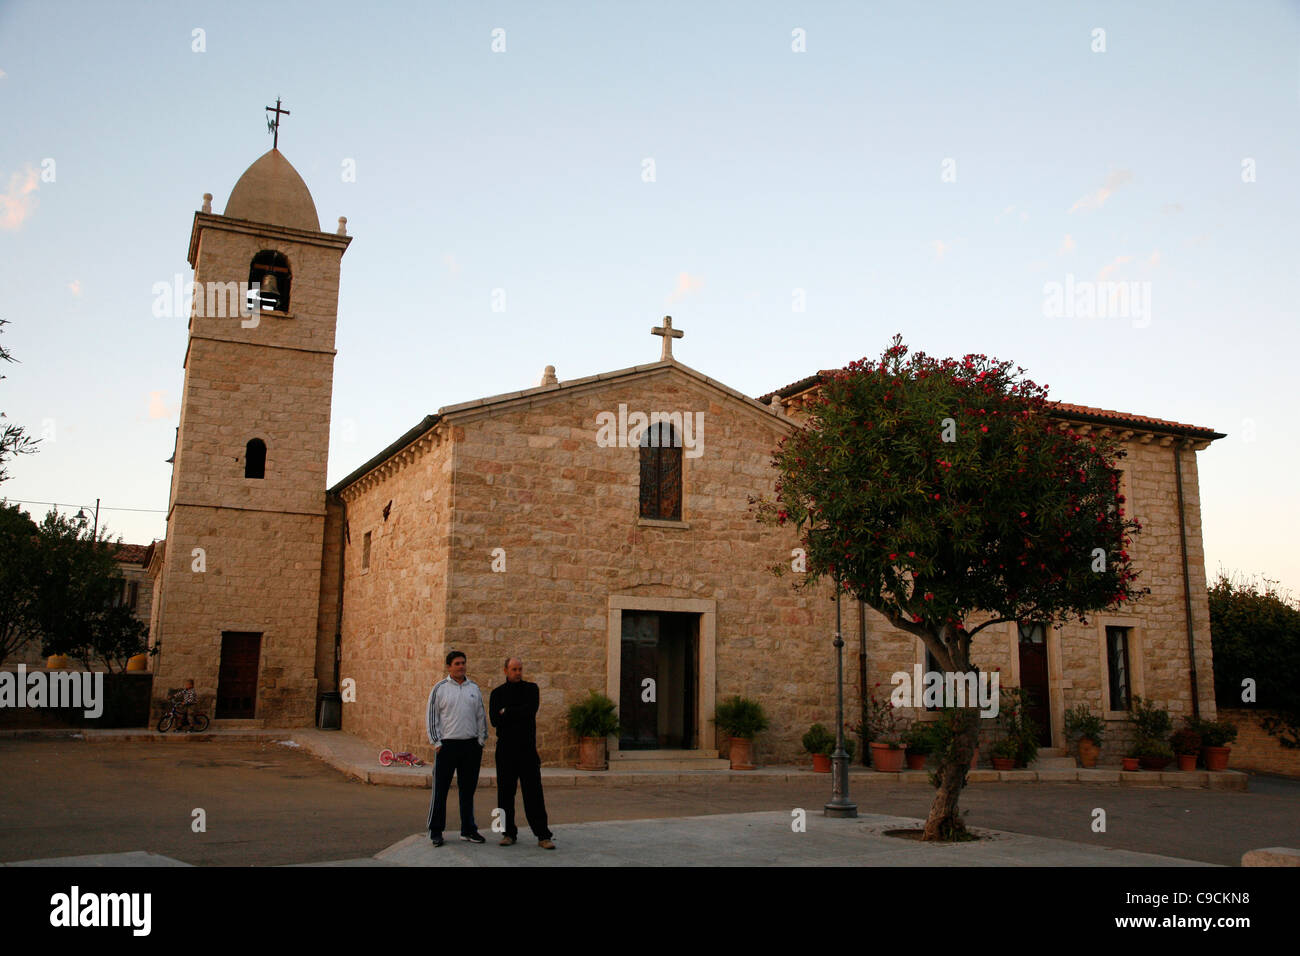 Church, San Pantaleo village, Sardinia, Italy. Stock Photo